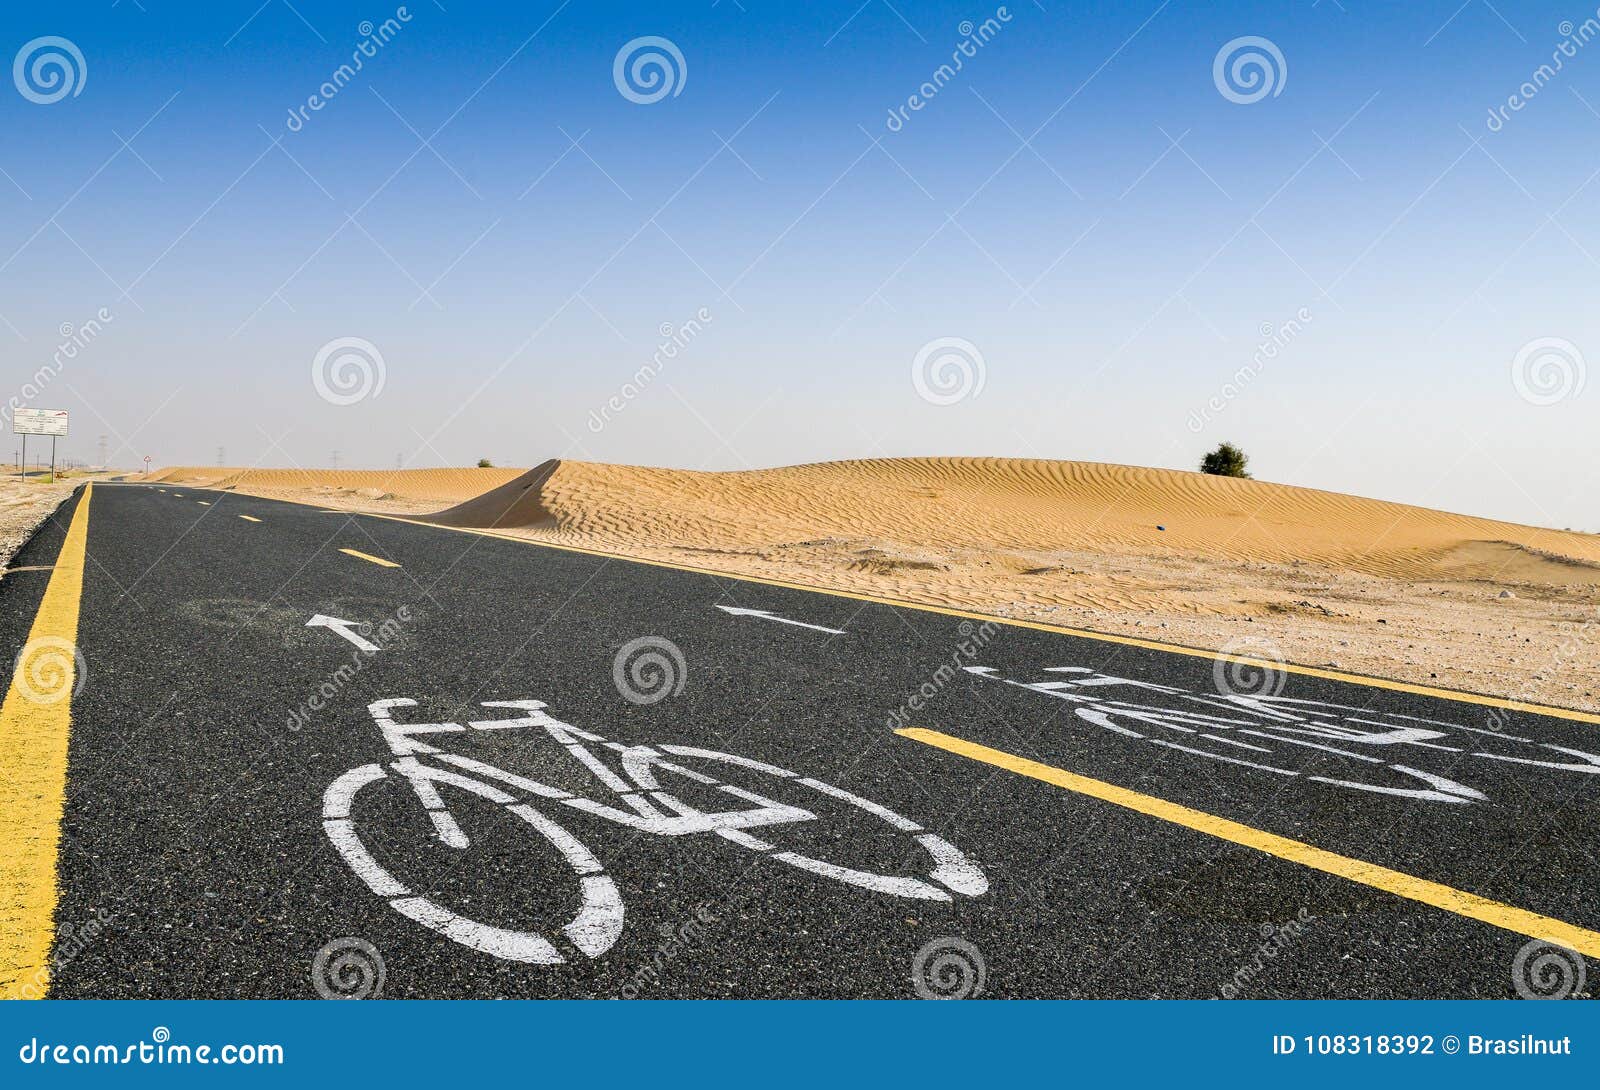 al qudra cycling track near dubai, united arab emirates, middle east